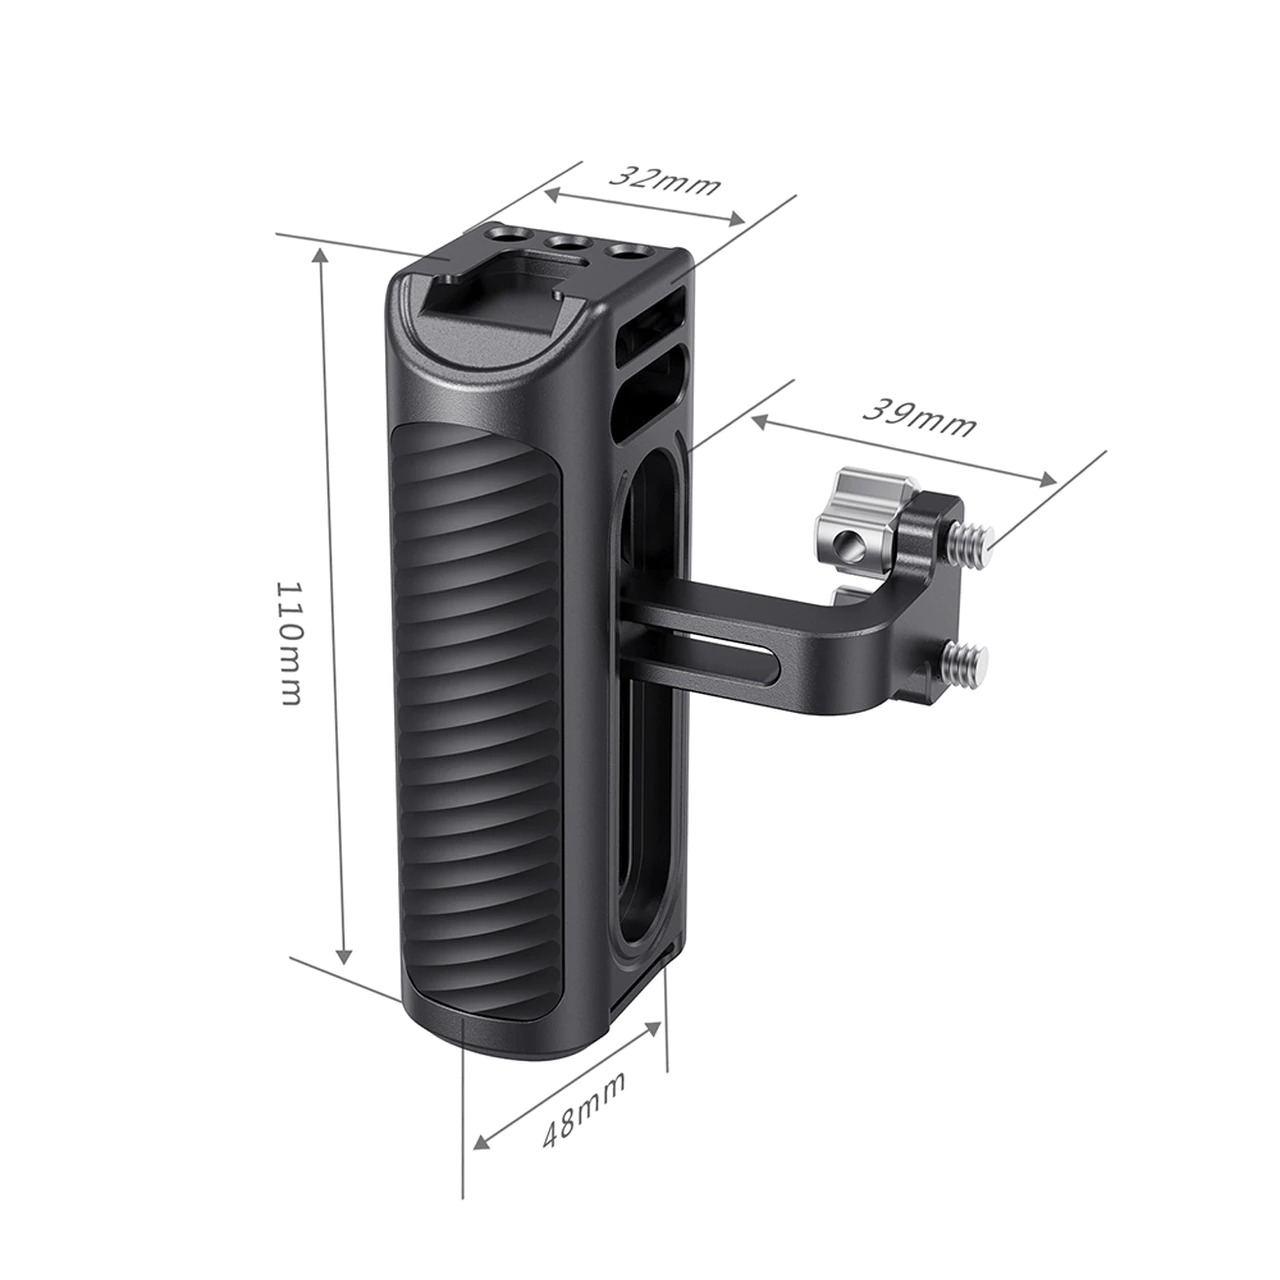 SmallRig Aluminum Universal Side Handle HSS2425 ด้ามจับด้านข้าง ชุดริกกล้อง ติดได้ทั้งมือซ้าย-ขวา ปรับความสูงได้ กริปซิลิโคนกันลื่น ราคา 1700 บาท